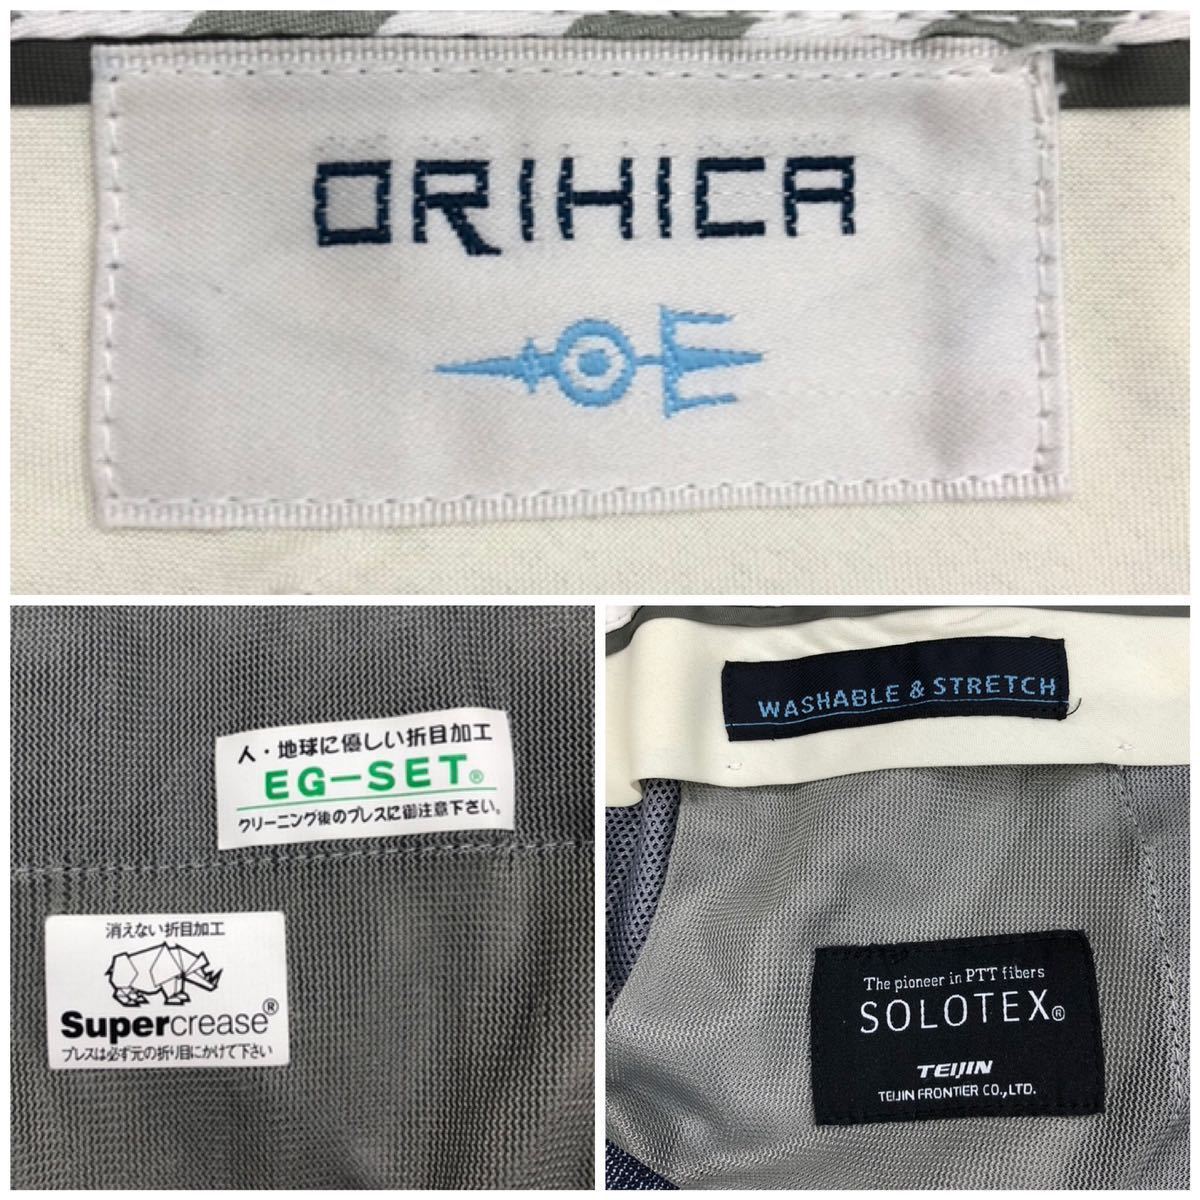 ORIHICA オリヒカ メンズ セットアップスーツ Smart 10month SOLOTEX TEIJIN ジャケット 背抜き 3B パンツ チェック柄 ネイビー系 M/W79_画像8